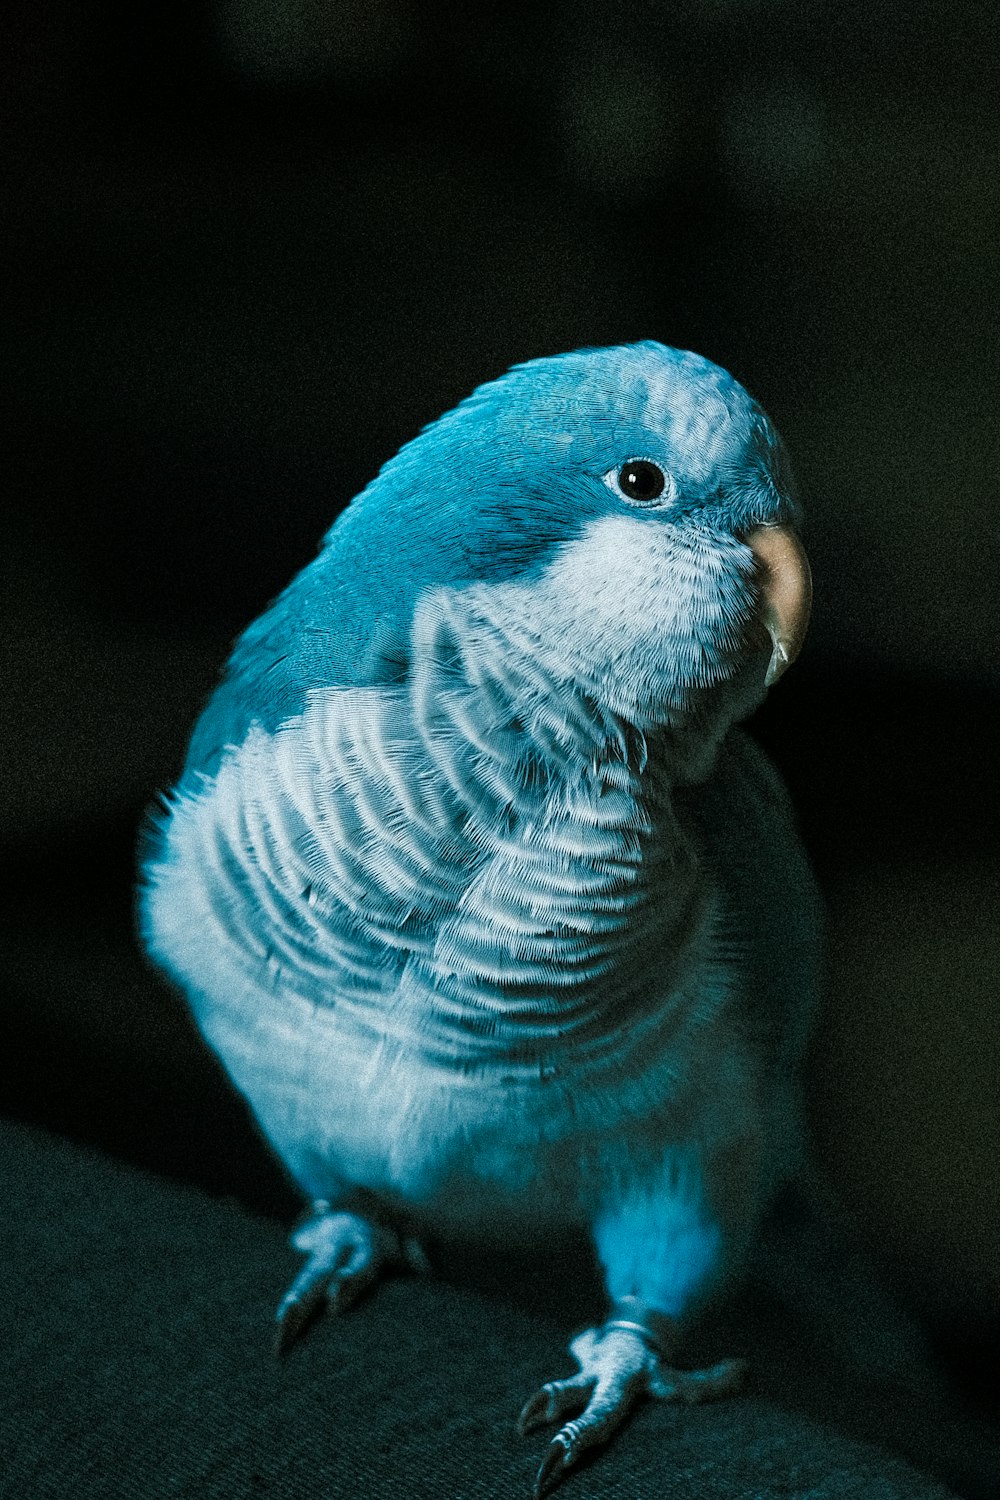 blue and white bird on black textile